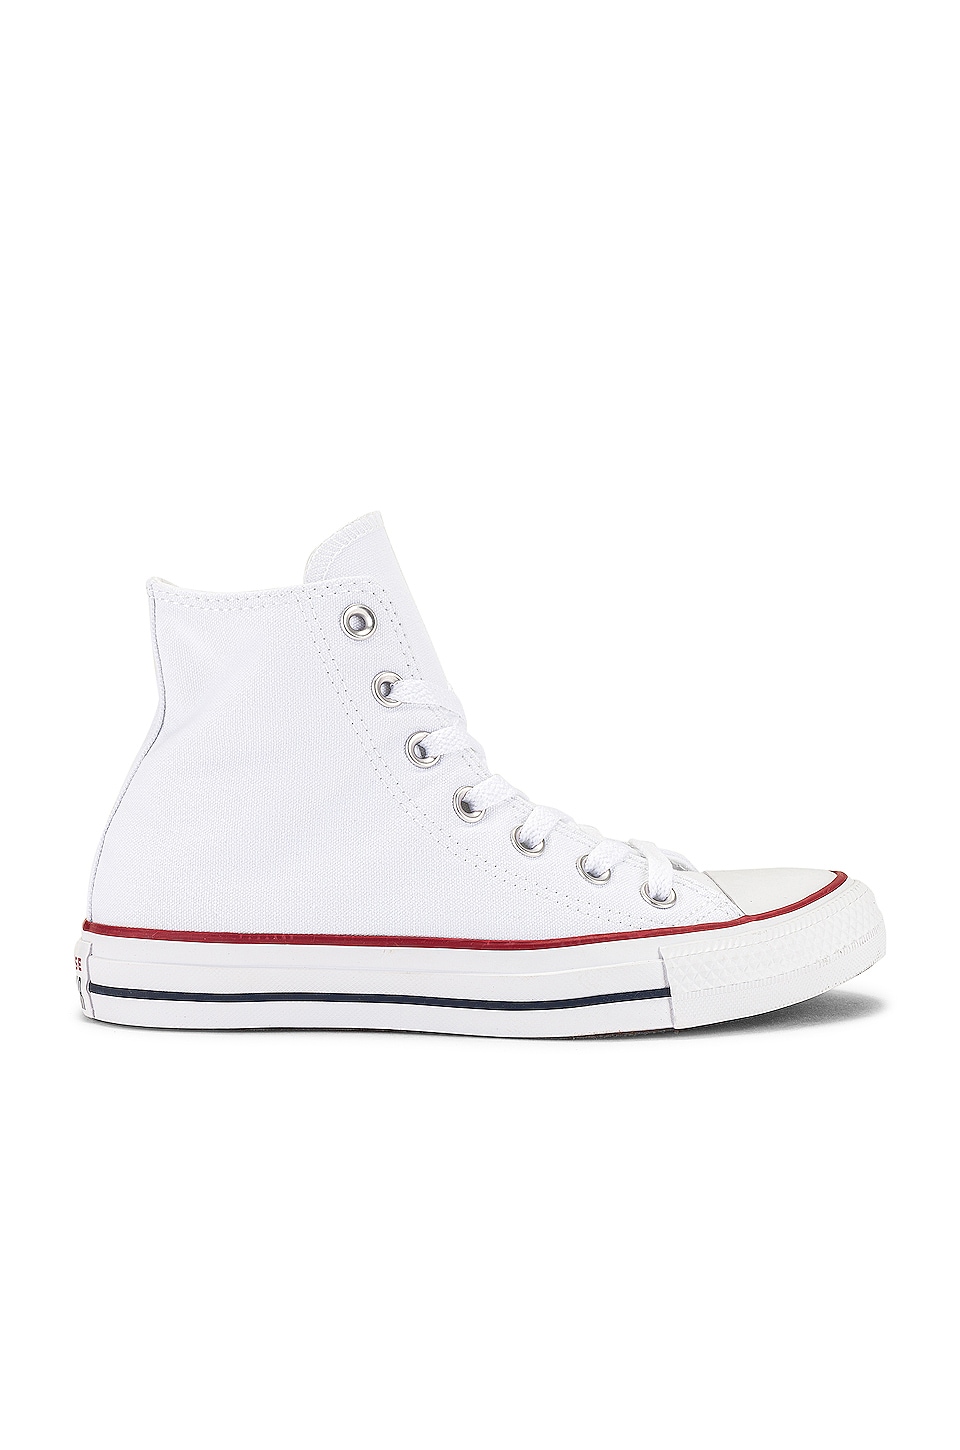 Converse Chuck Taylor All Star Hi Sneaker in Optical White | REVOLVE